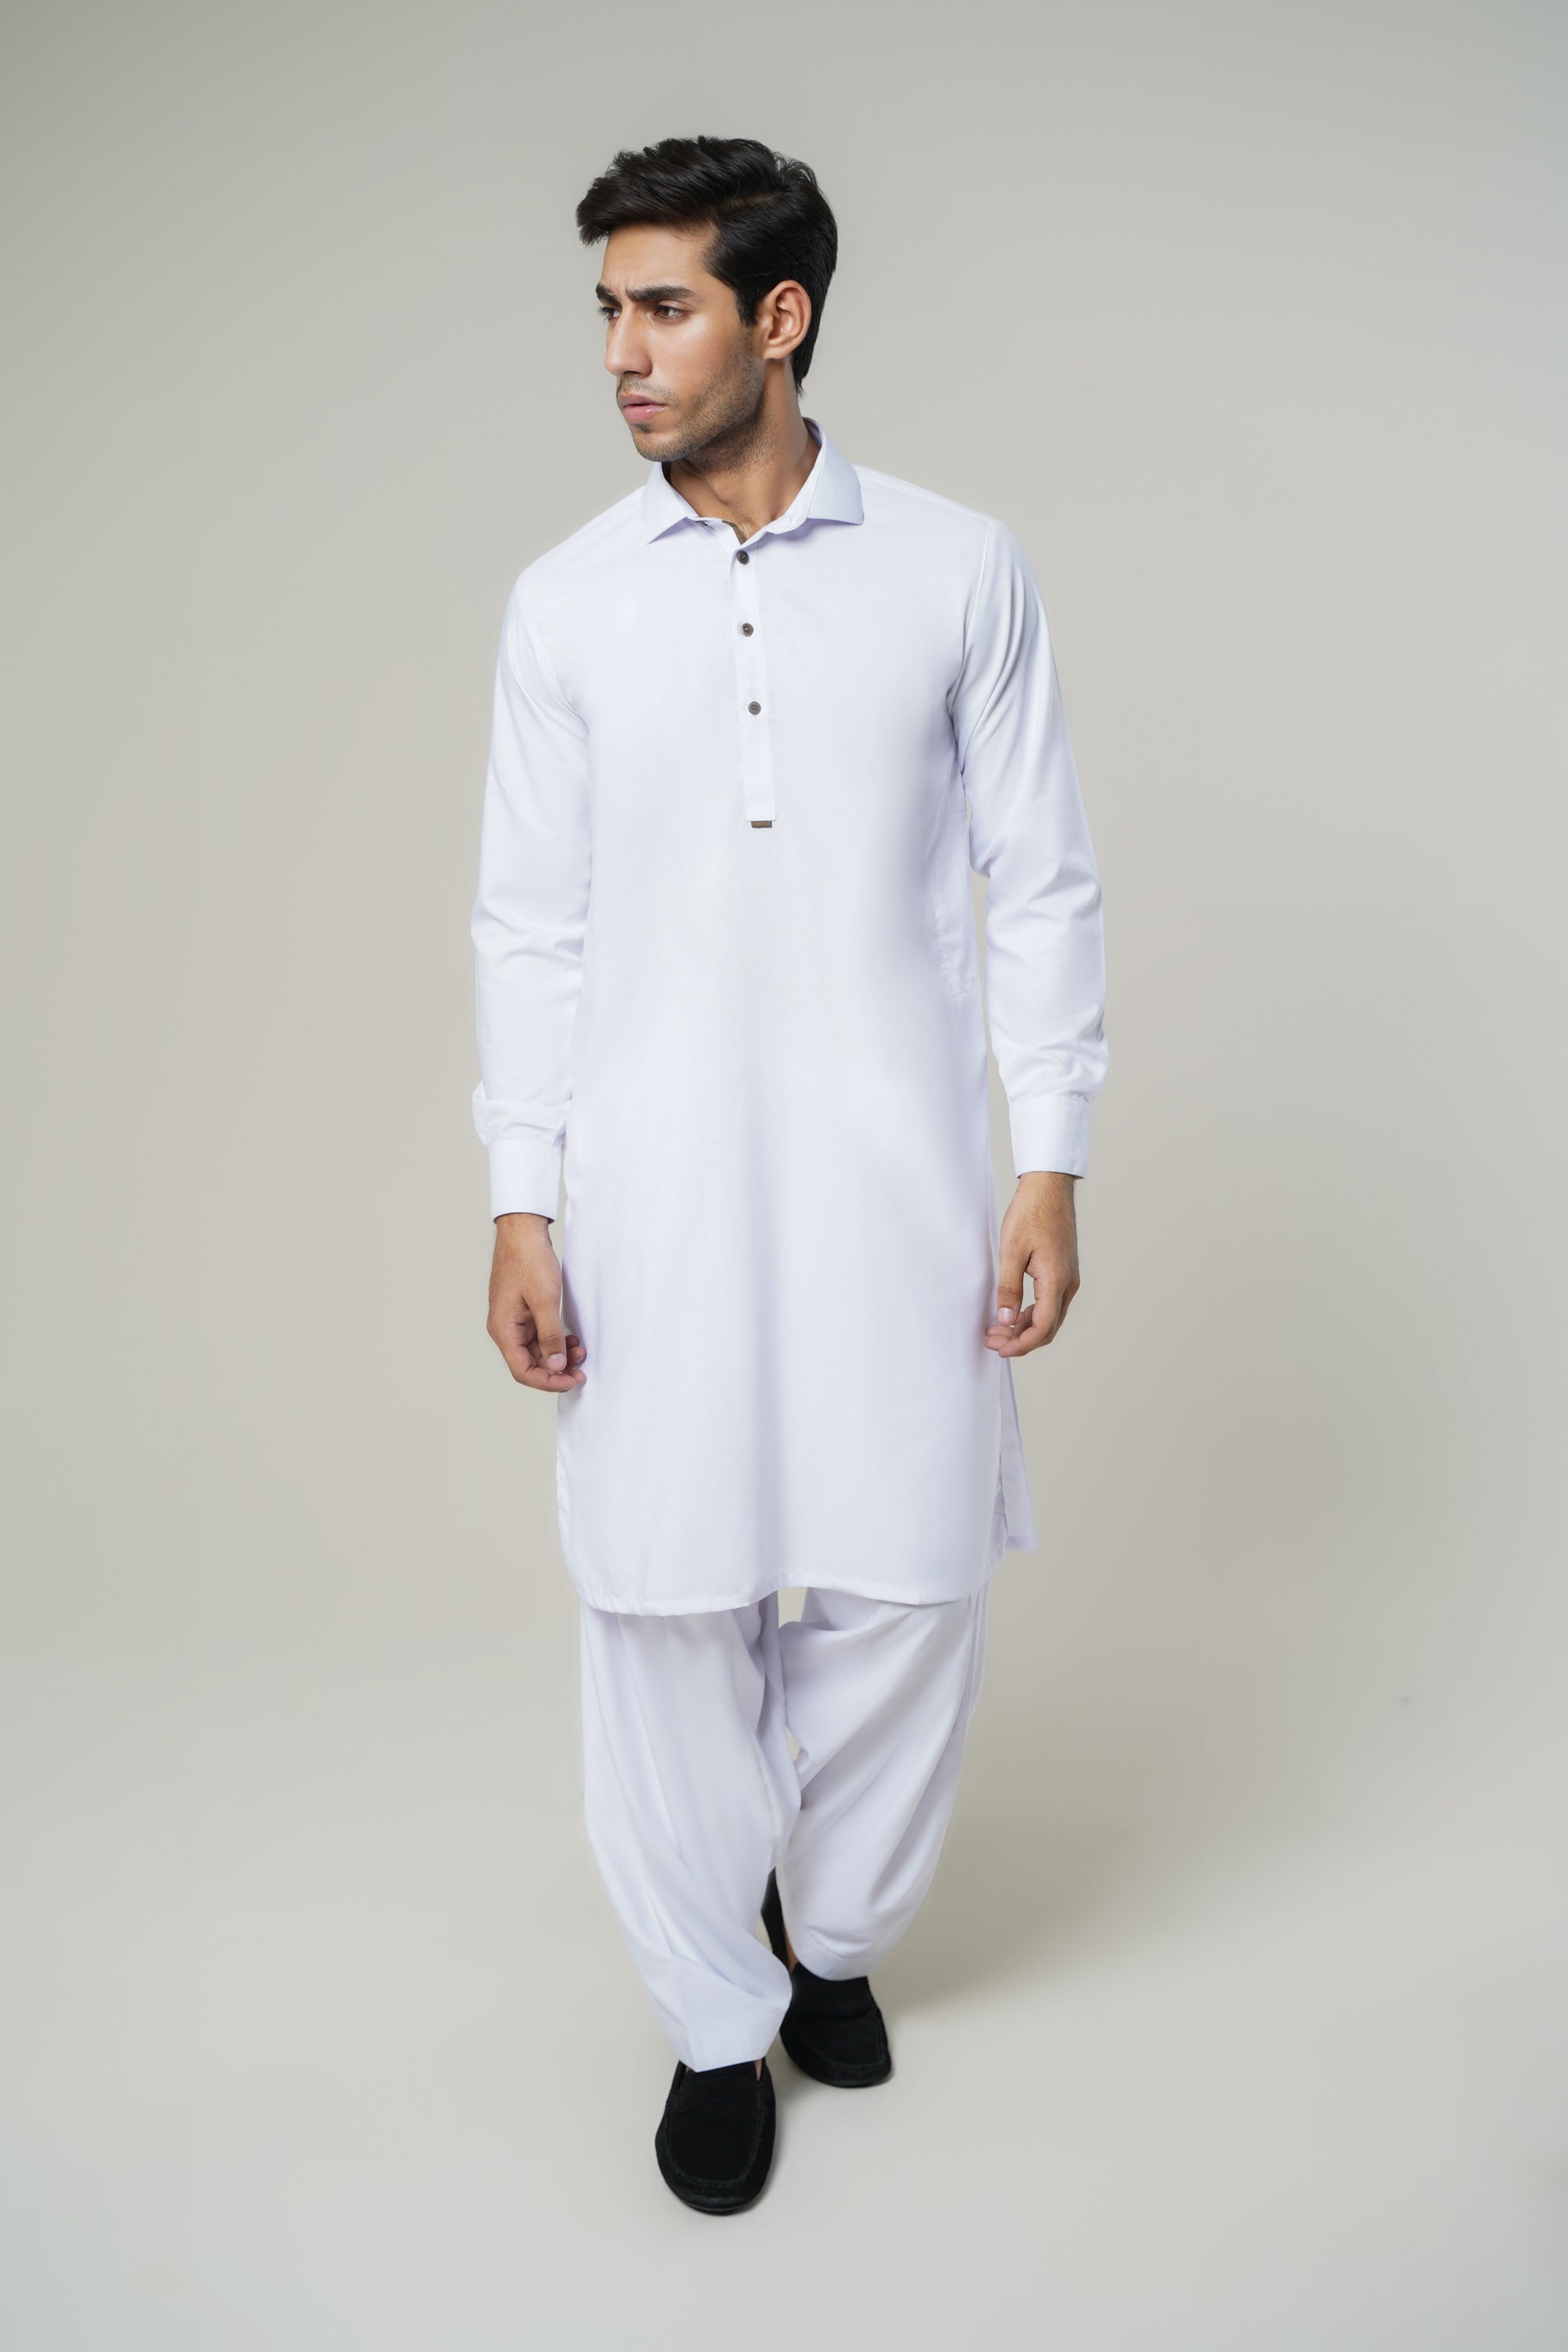 online shalwar kameez shopping in Pakistan